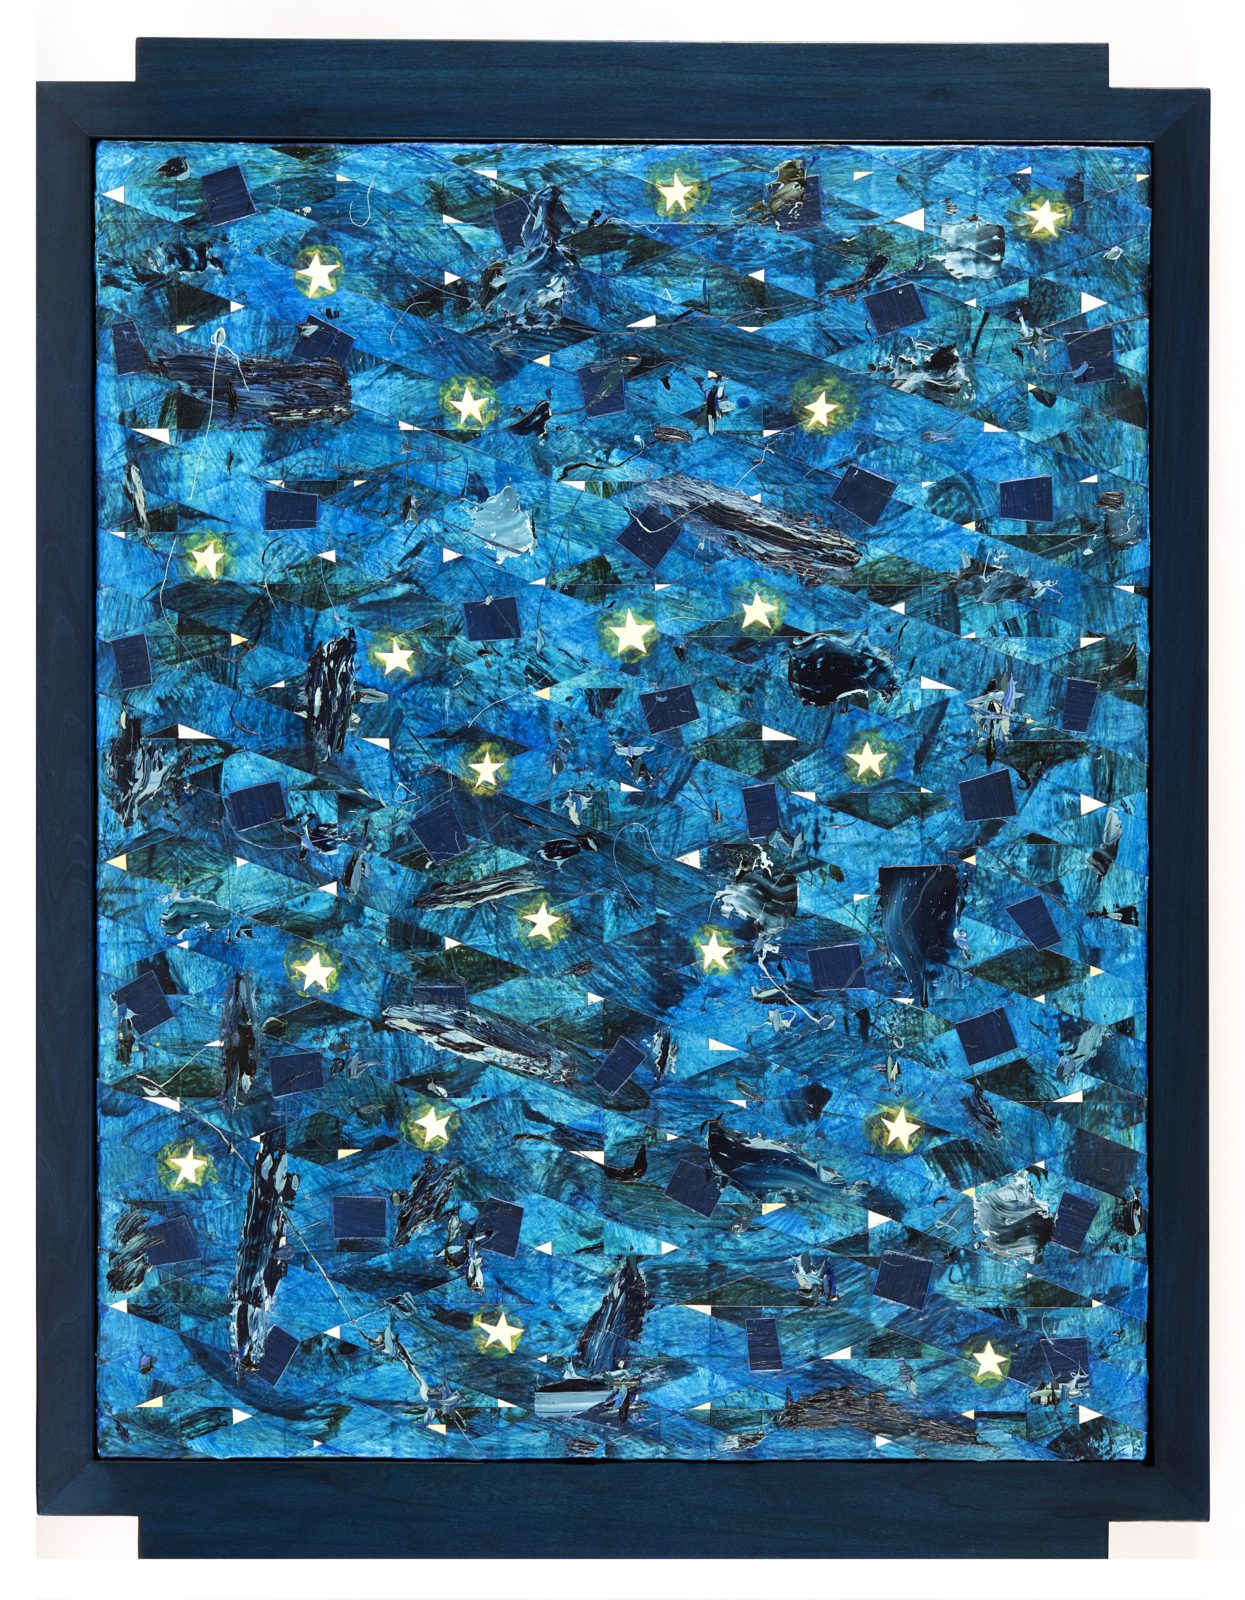 Douglas Melini Starry Sky Piece at the Schneider Museum of Art at Southern Oregon University